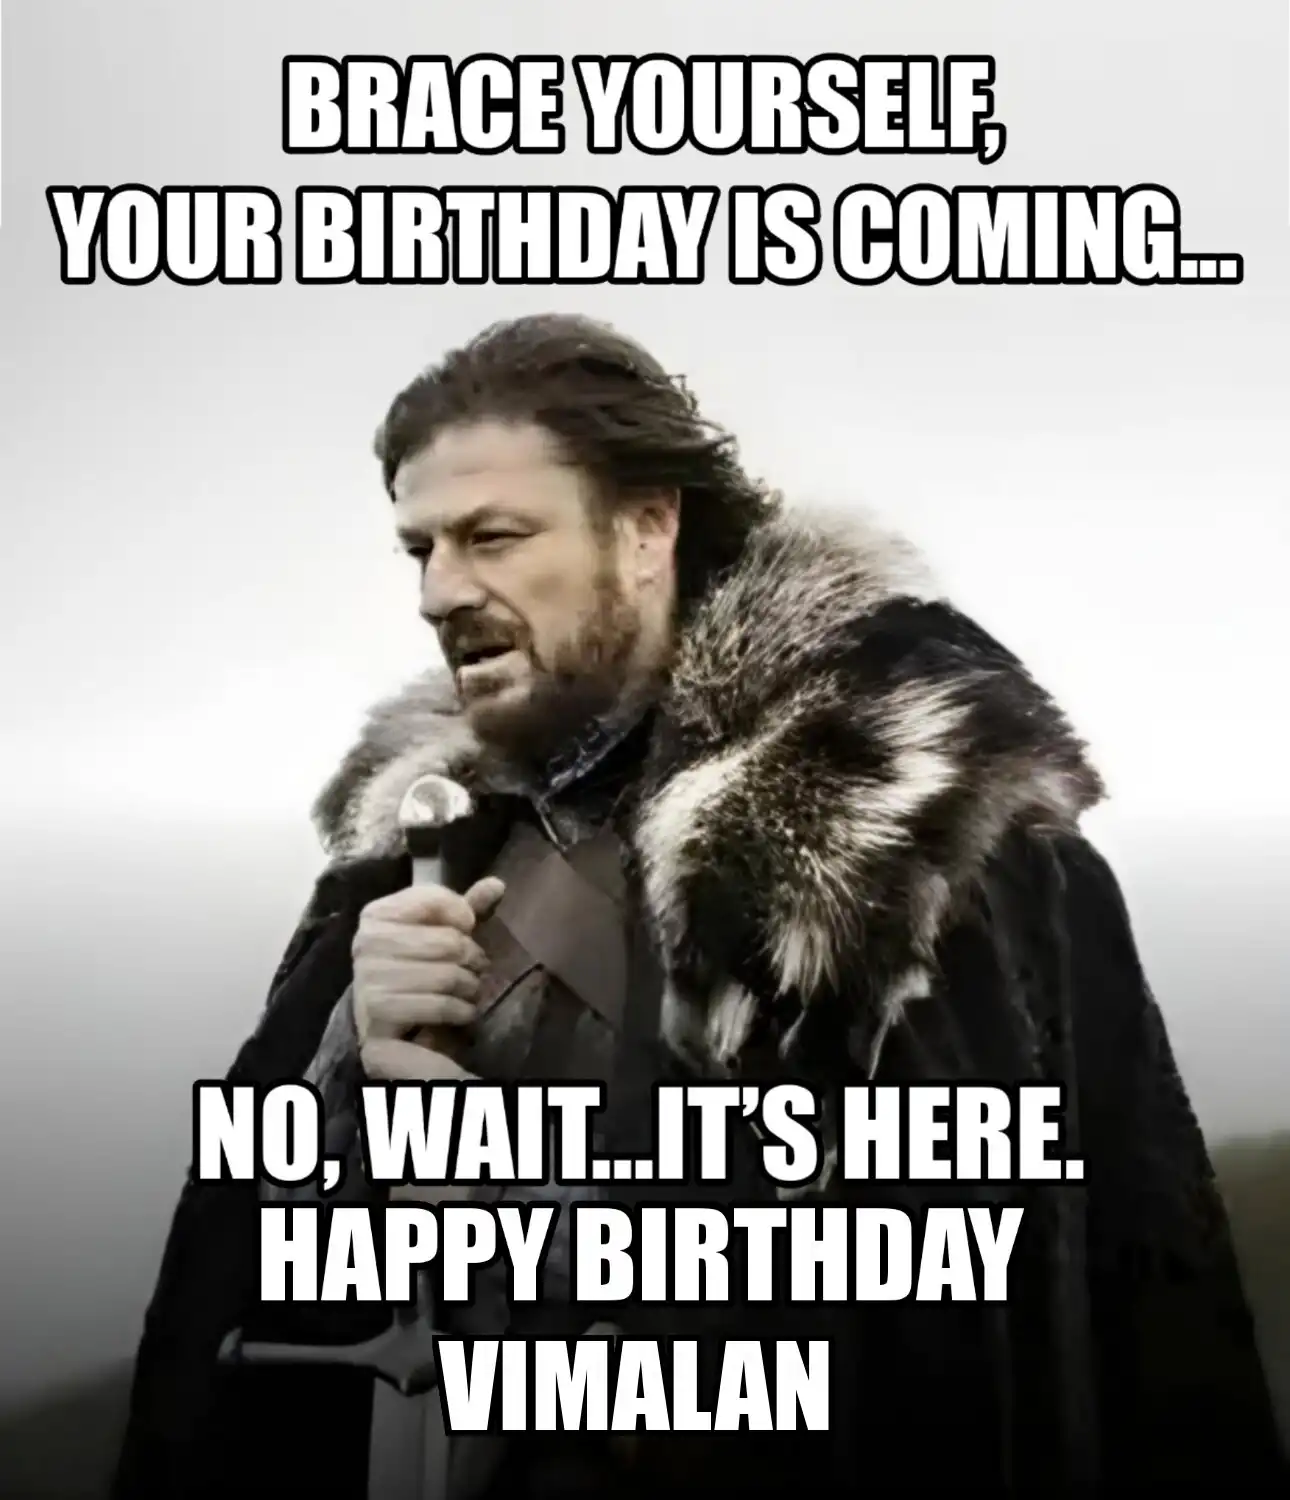 Happy Birthday Vimalan Brace Yourself Your Birthday Is Coming Meme